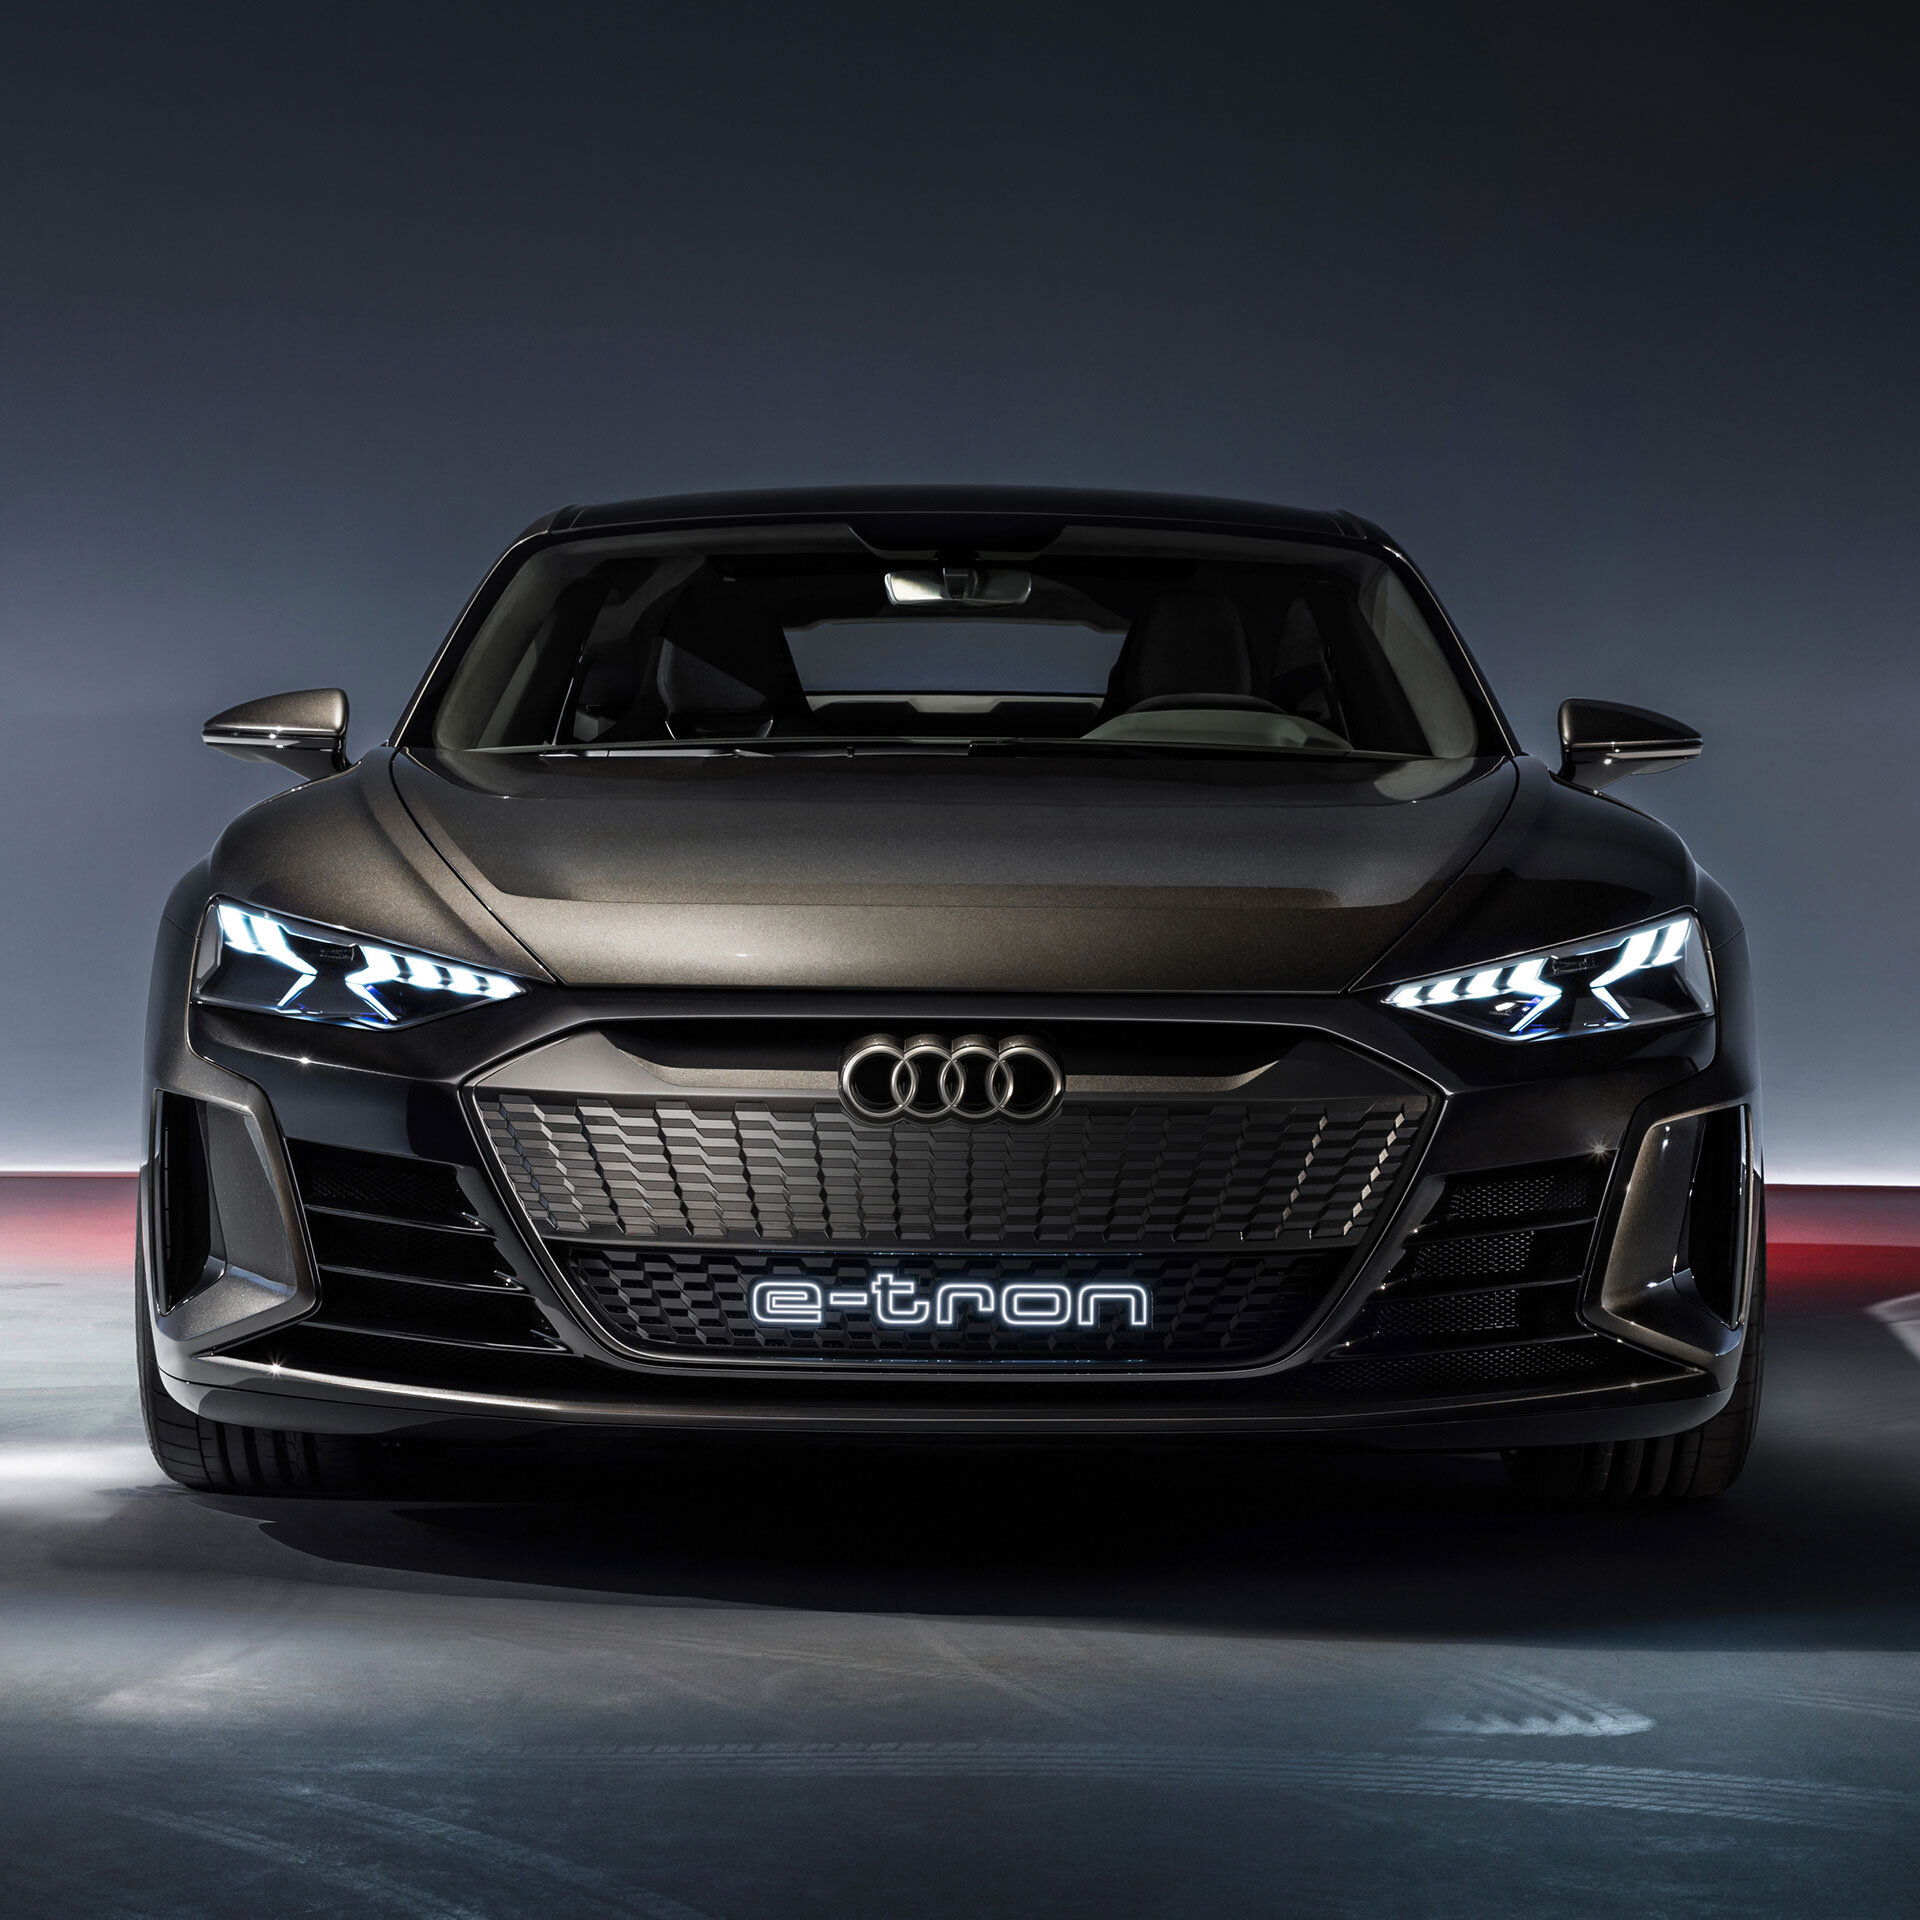 Audi e-Tron GT 2020 front view headlights logo 4k uhd wallpaper view